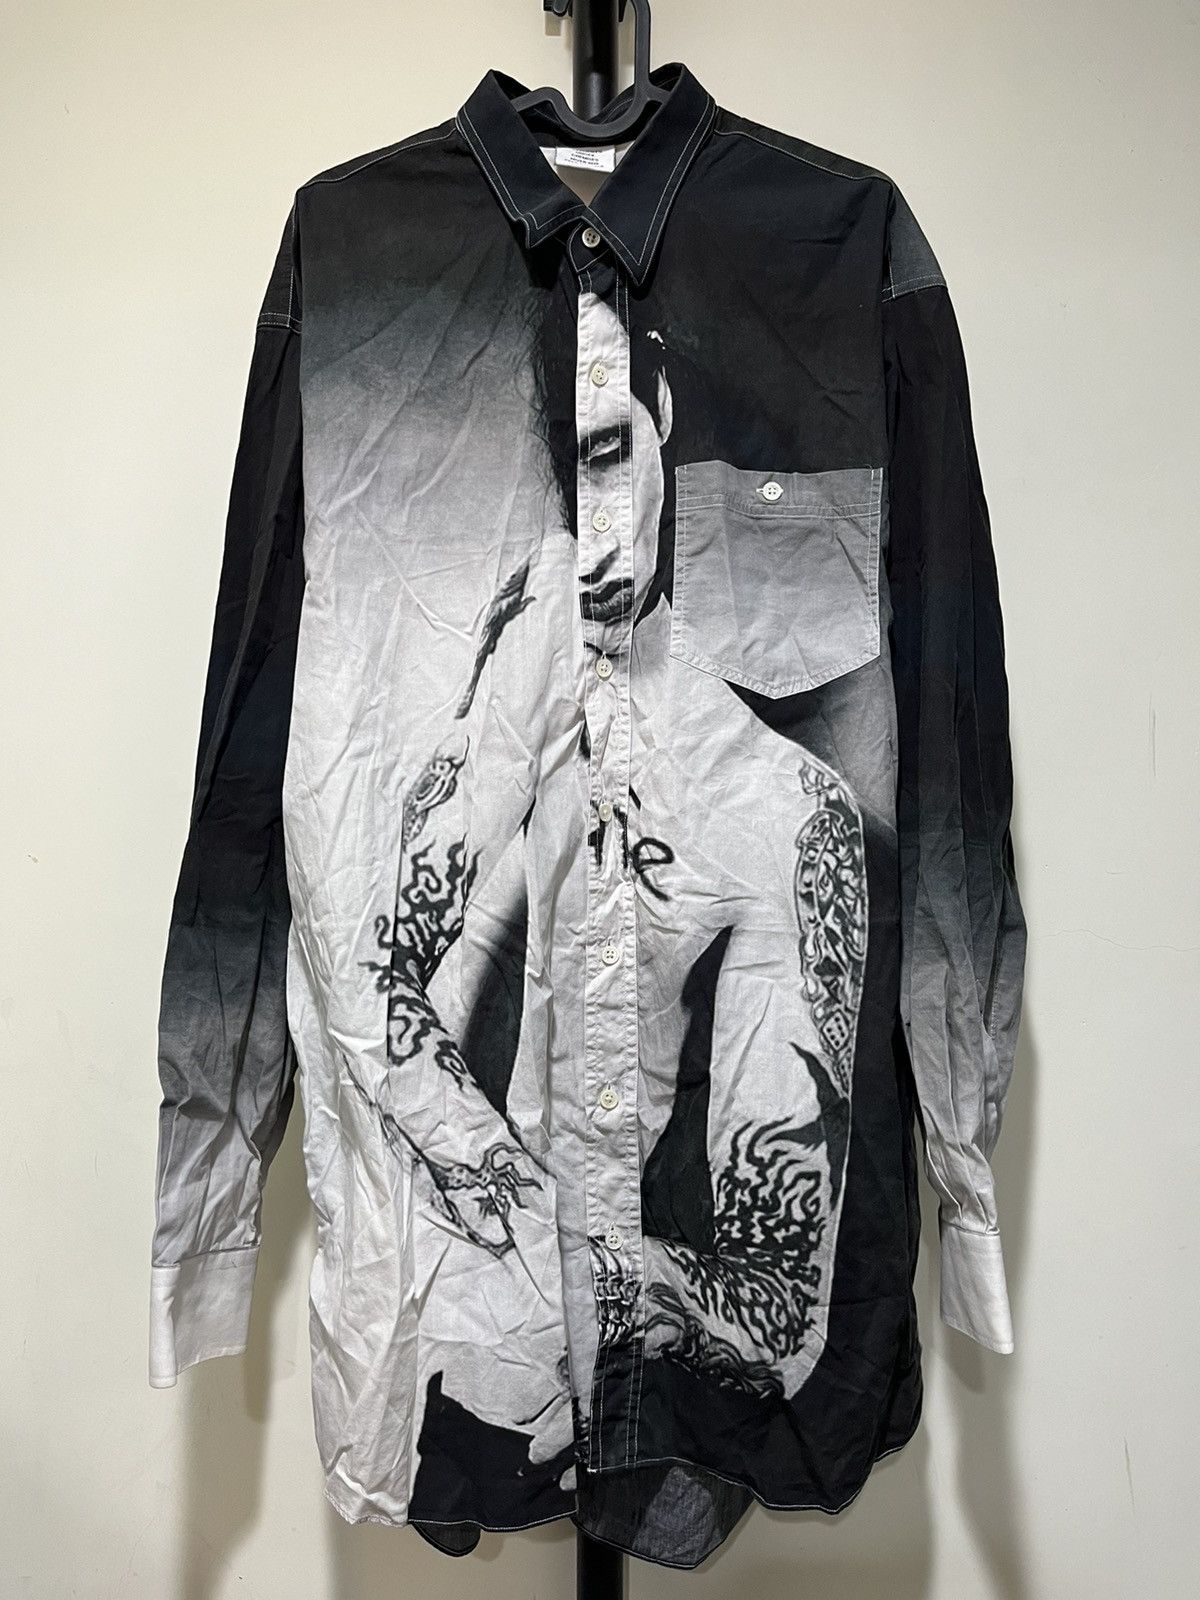 Vetements VETEMENTS Marilyn Manson Shirt | Grailed